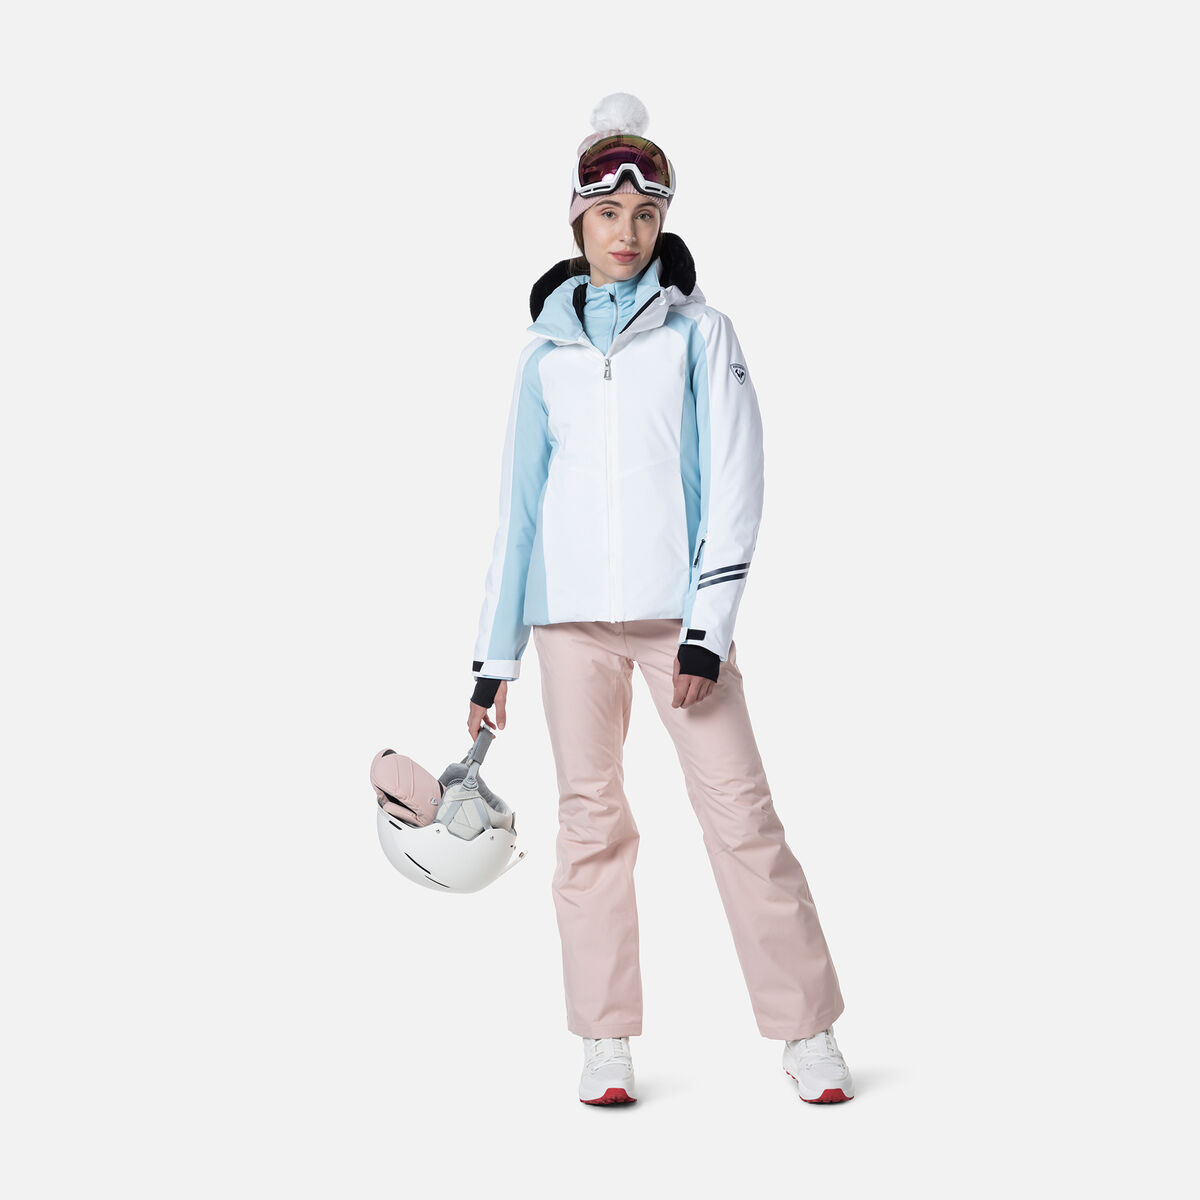 Russian Winter Ski Suit For Men Women Black White Warm Suit Outdoor Ski  Clothing Snowboarding Sets